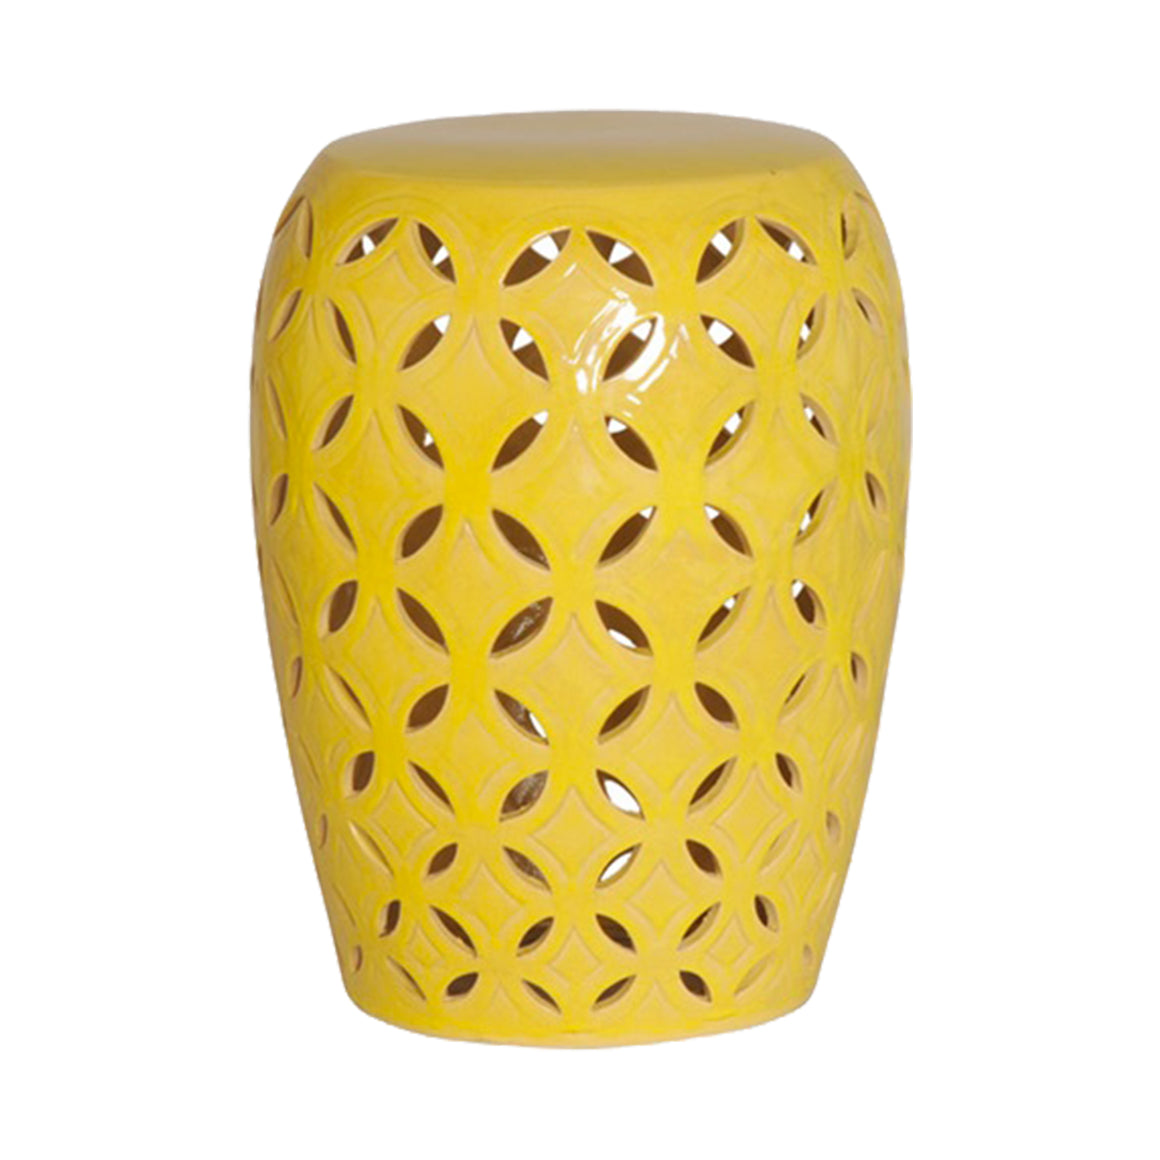 Lattice Garden Stool/Table with a Yellow Glaze